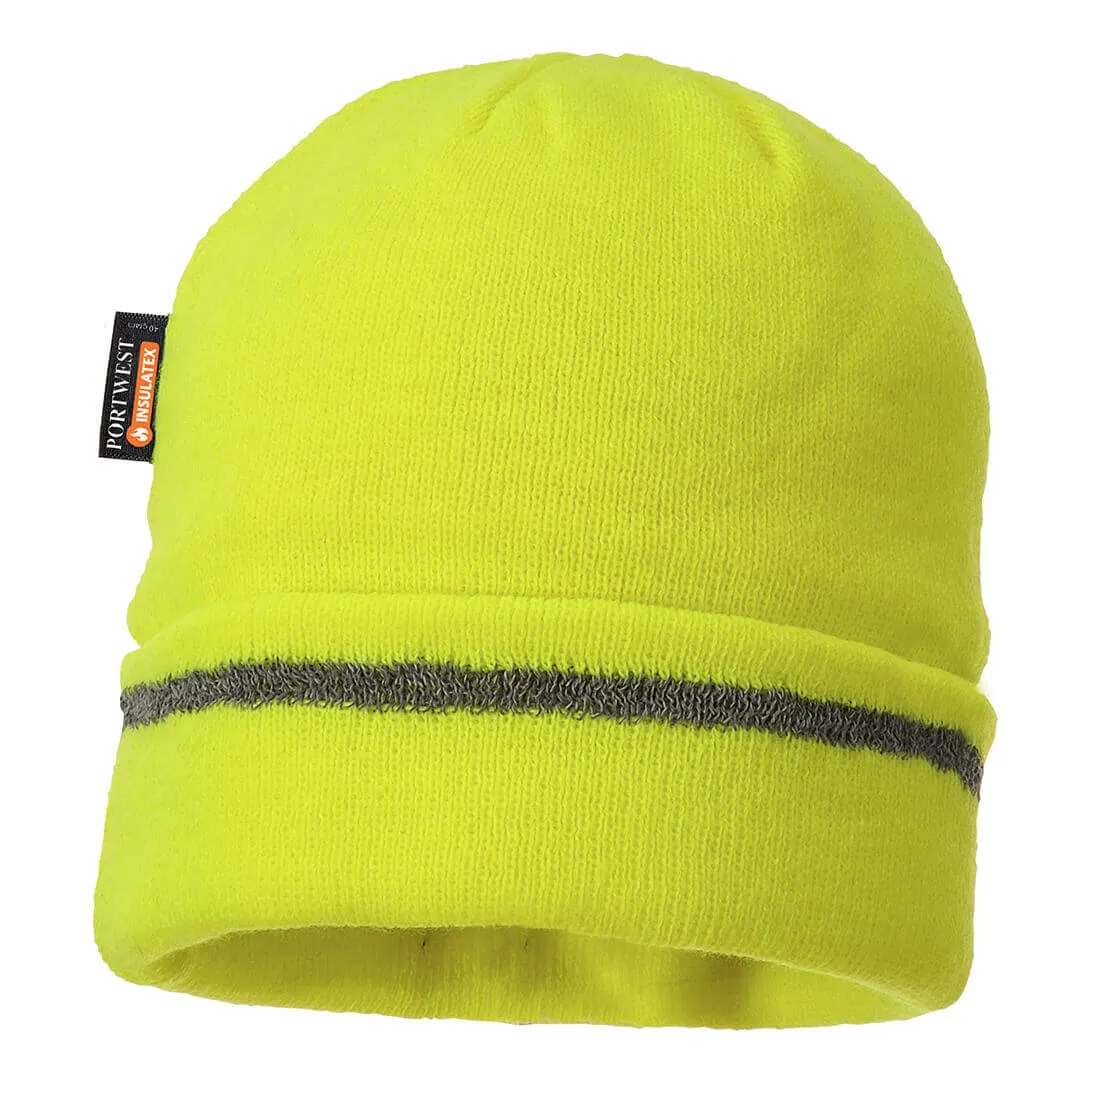 Portwest Reflective Trim Knit Hat - Yellow, One Size